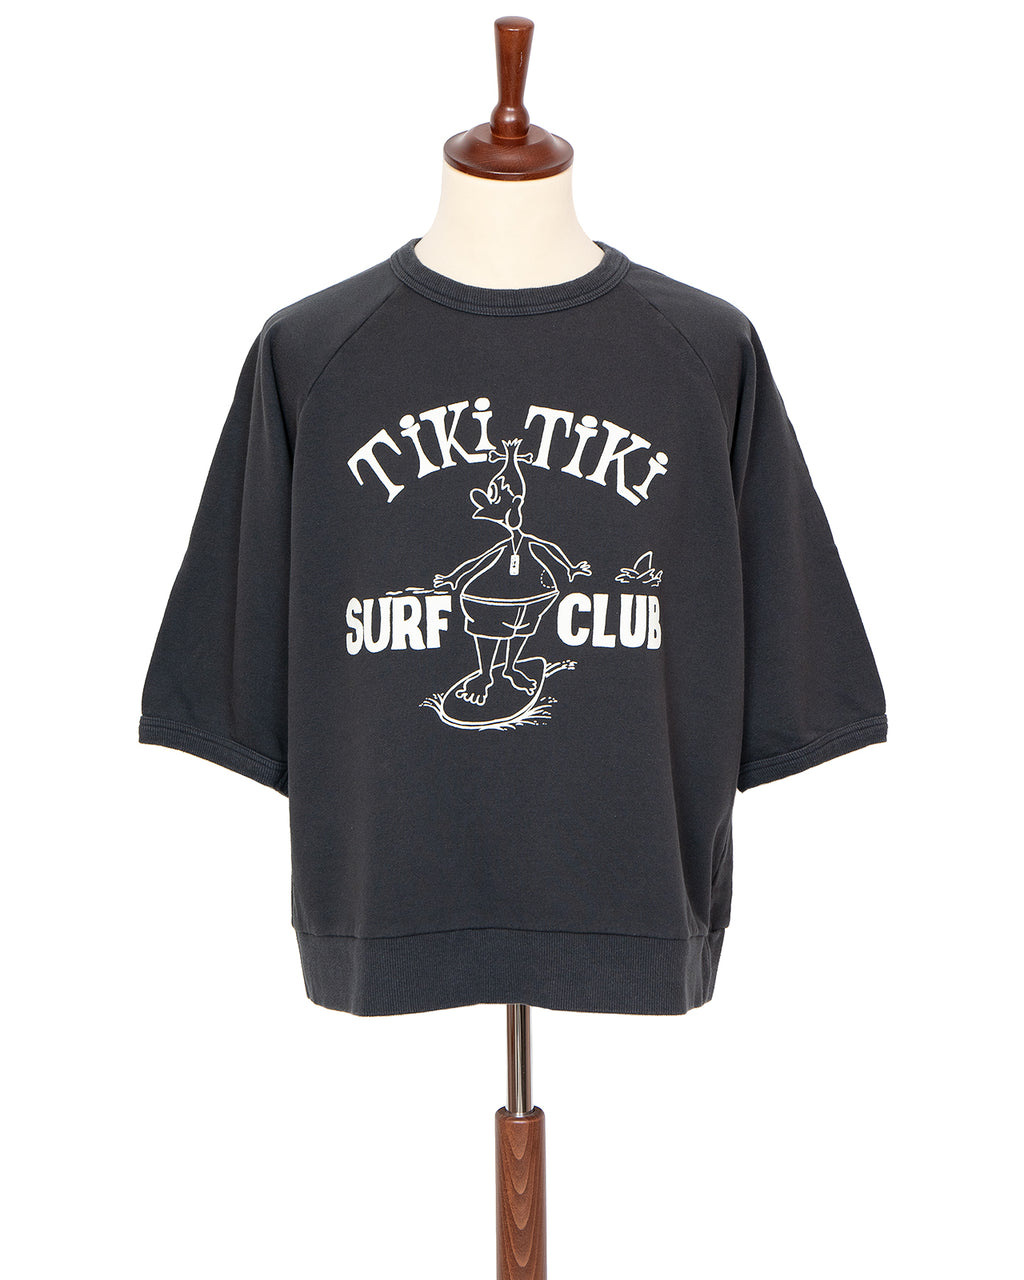 Weirdo Tiki-Tiki Surf Club S/S Sweat, Black